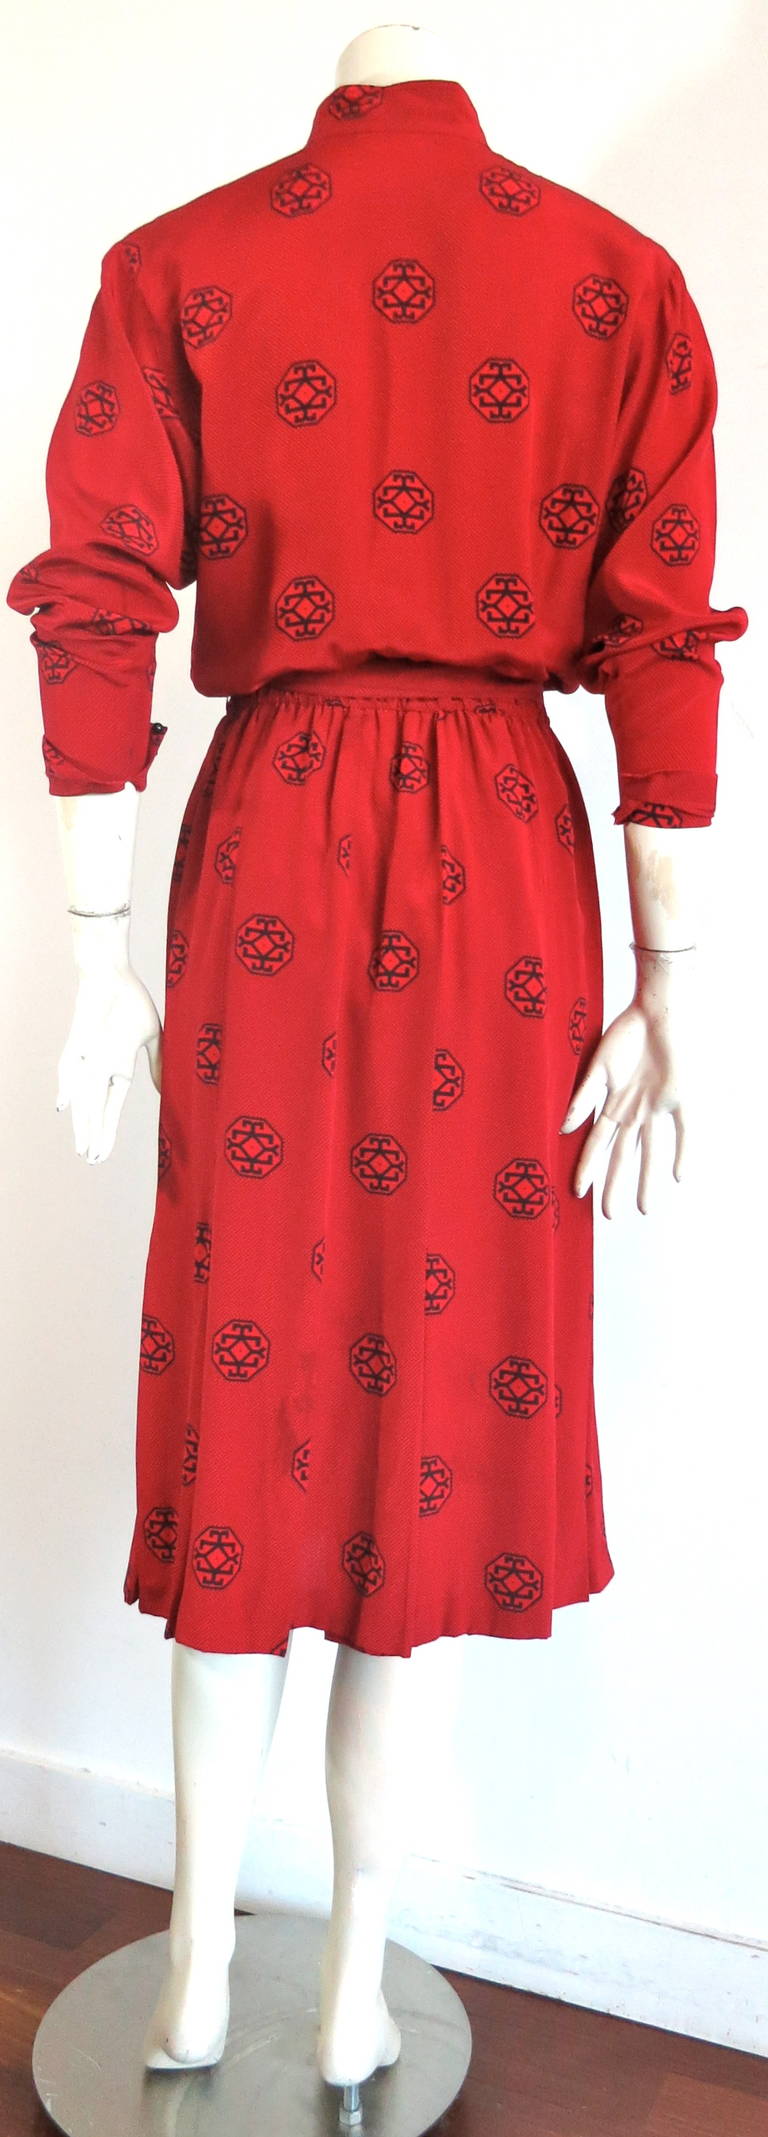 1970s GUY LAROCHE Red silk day dress For Sale 1